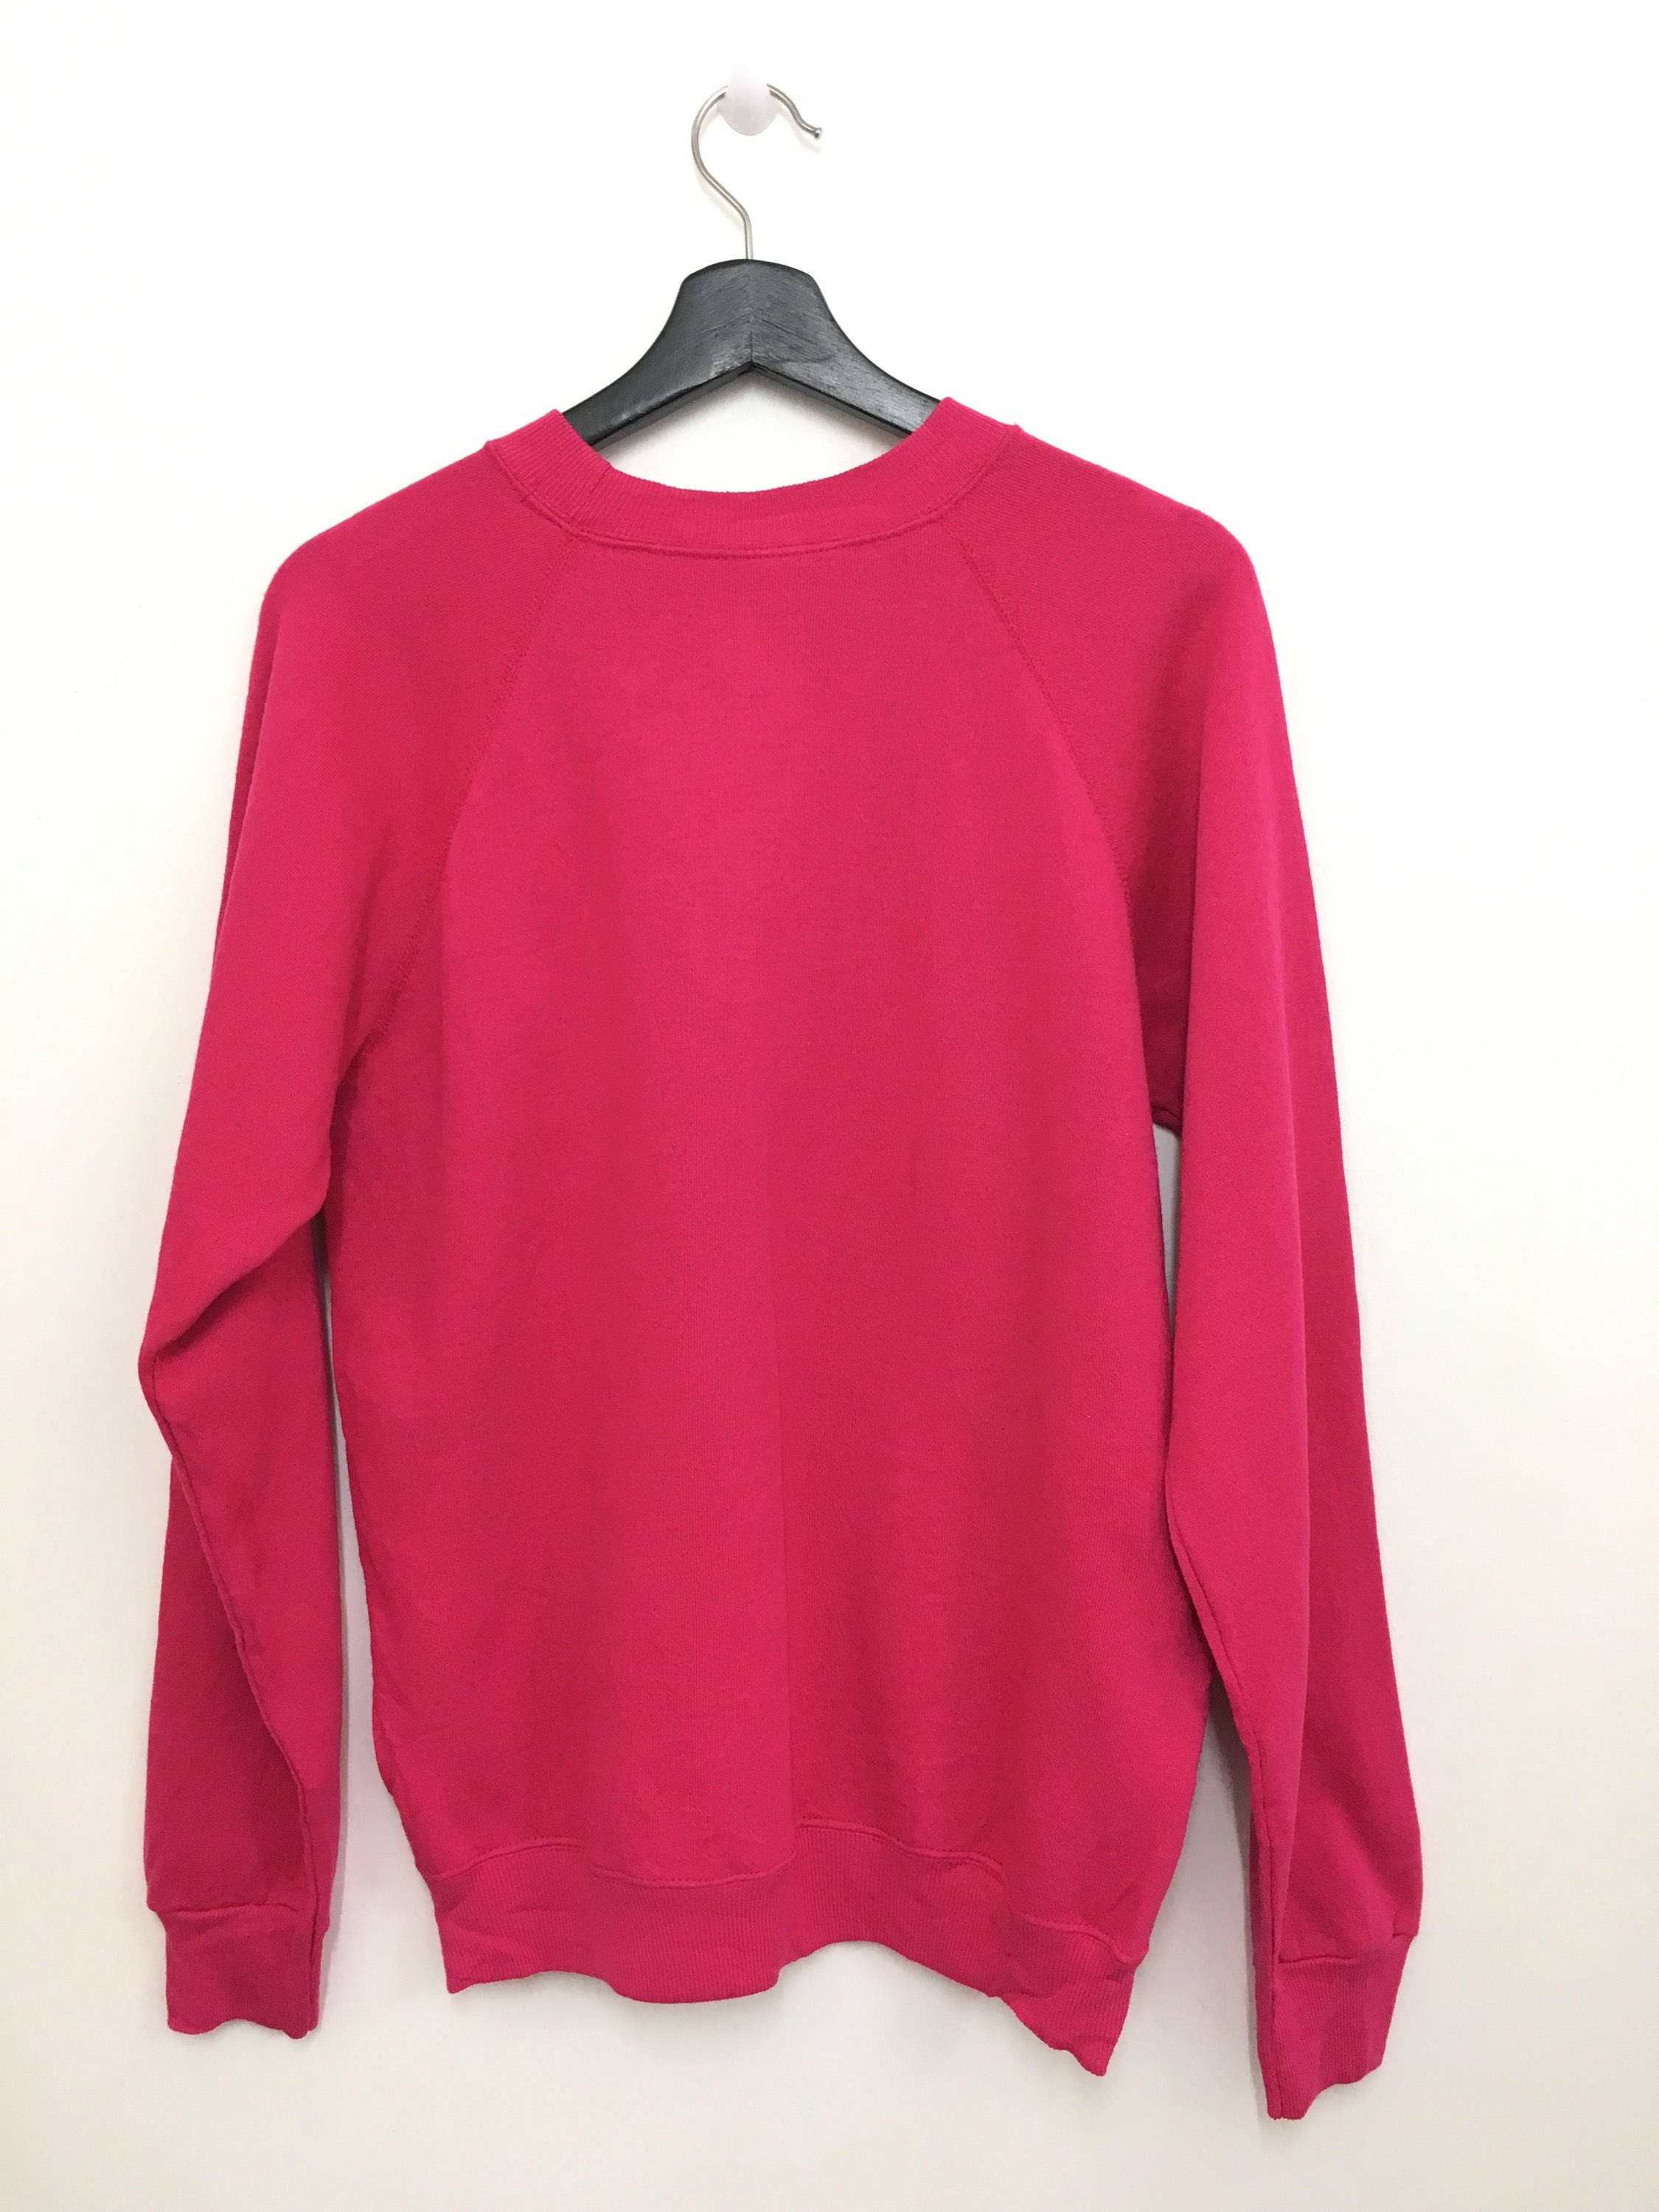 Very Rare Vintage 80s LAS VEGAS Sweater Sweatshirt Pullover Medium Size ...